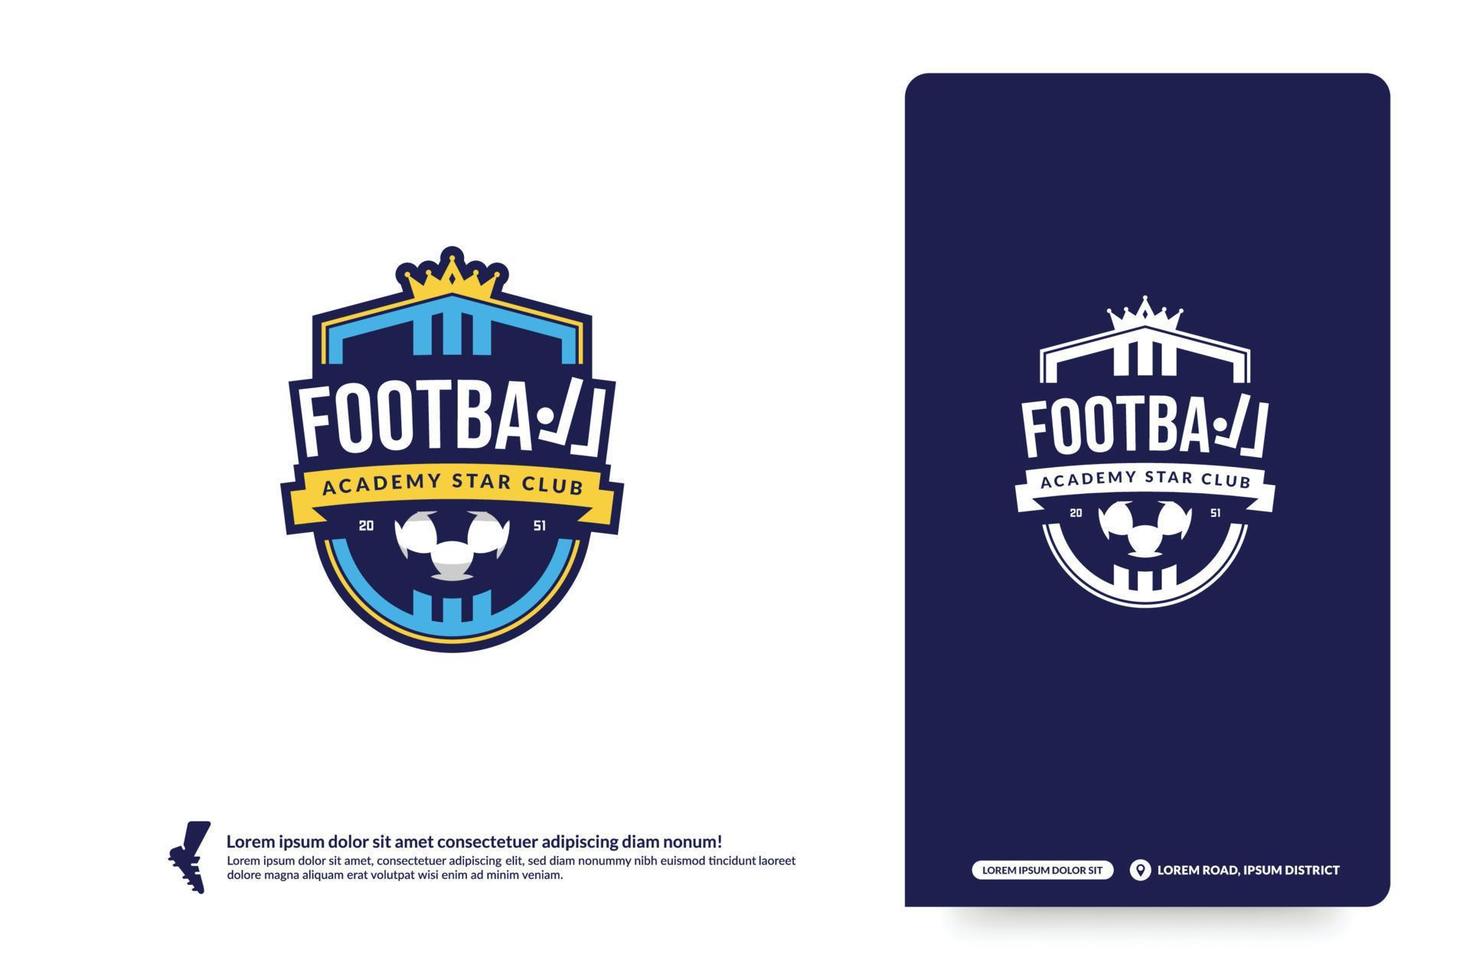 Football club logo template, Soccer tournaments logotype. Football team identity concept, Abstract sport badge design vector illustrations